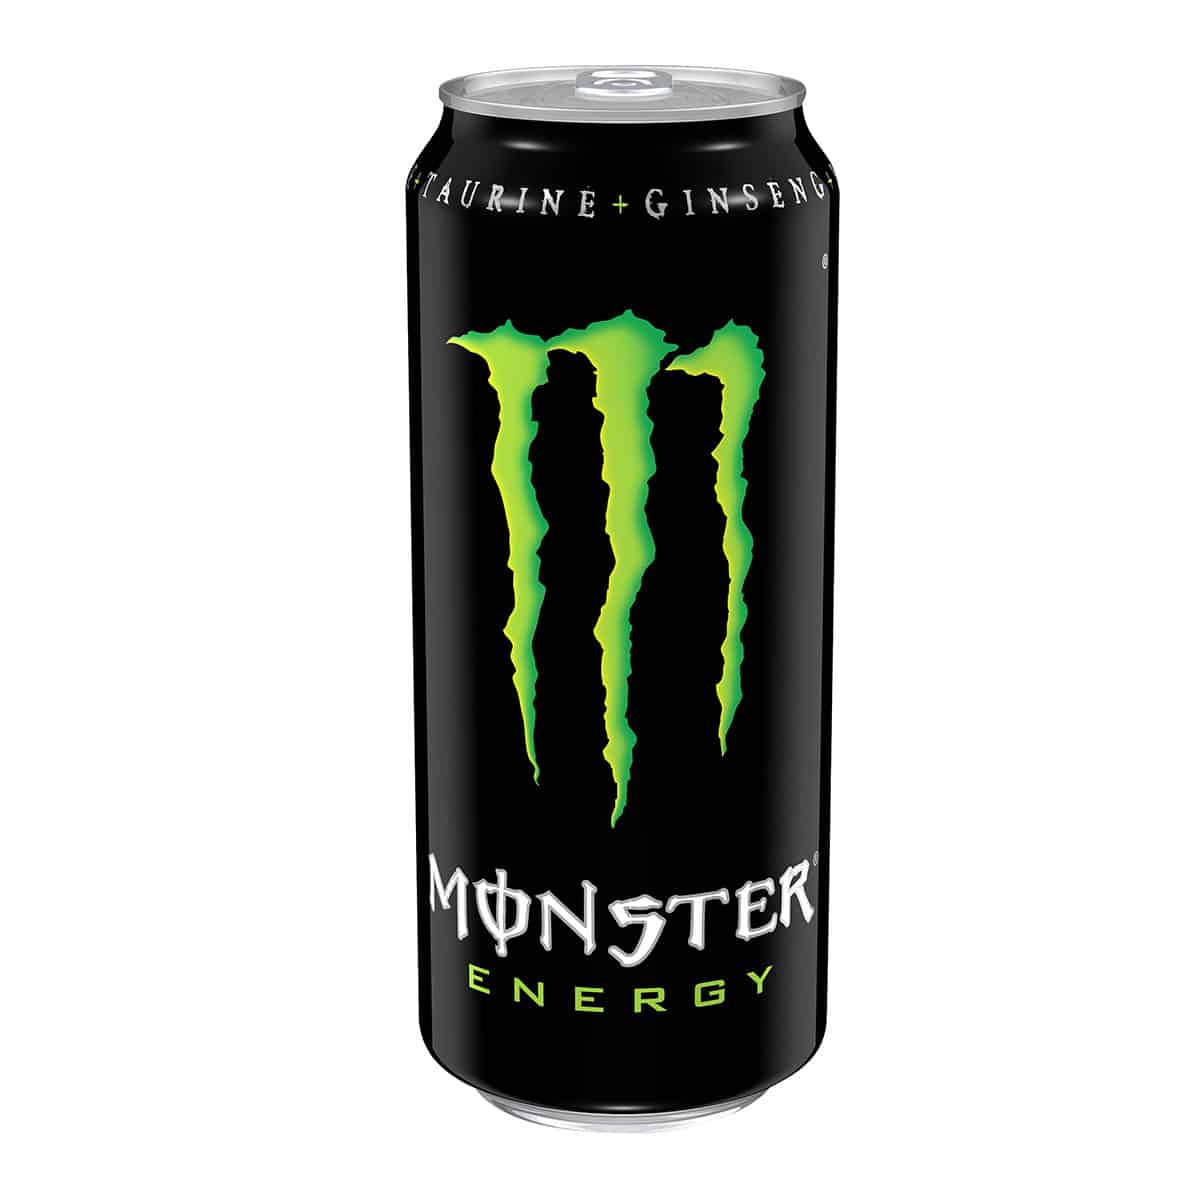 Monster Energy Drink Original - 500ml